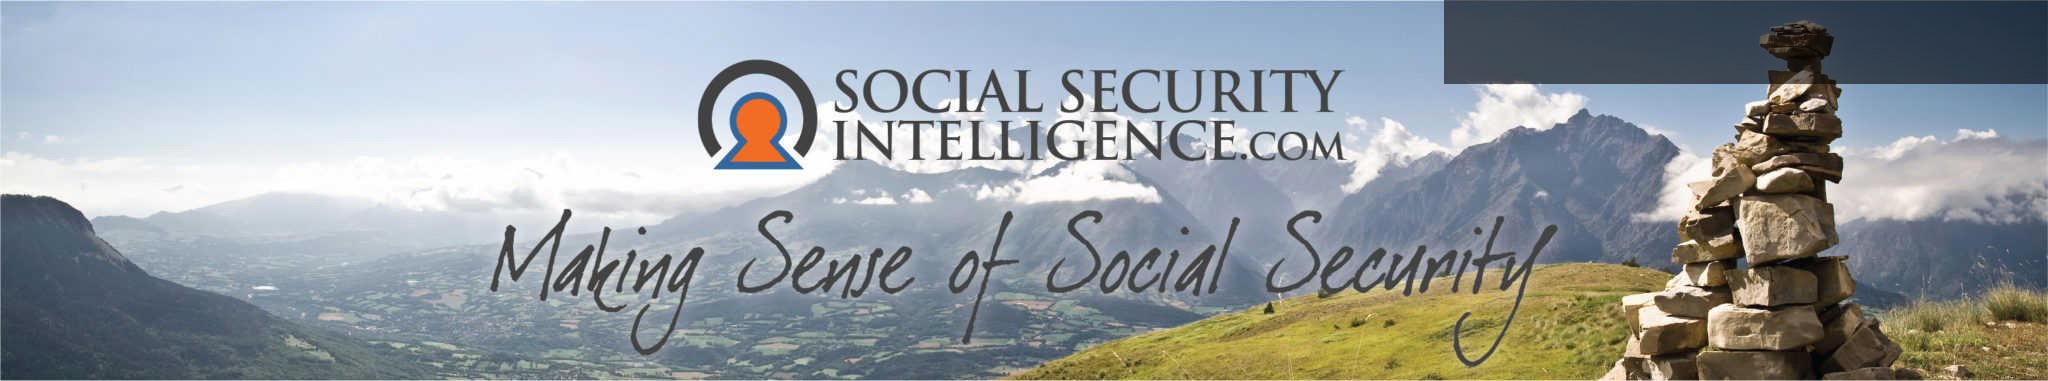 Social Security Intelligence Forum